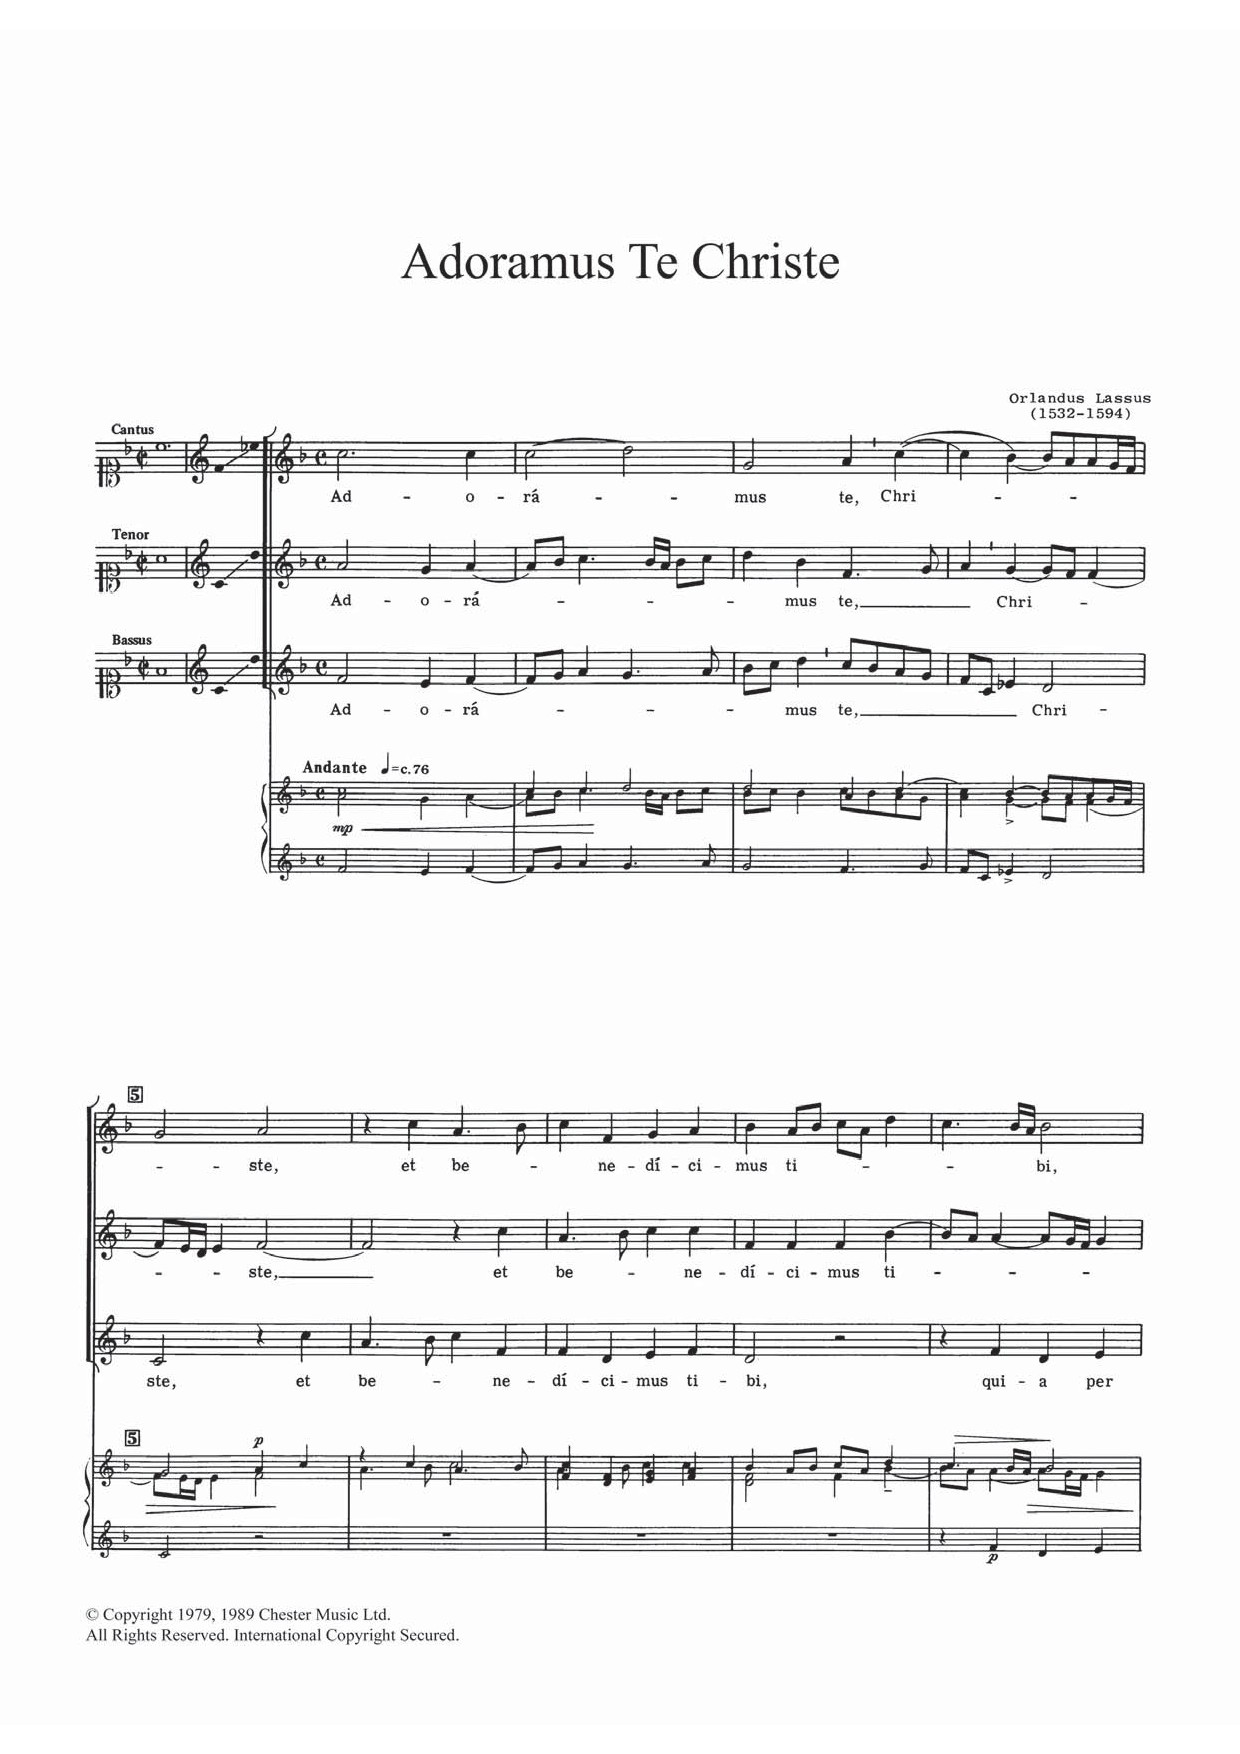 Orlandus Lassus Adoramus Te Christe Sheet Music Notes & Chords for STB - Download or Print PDF